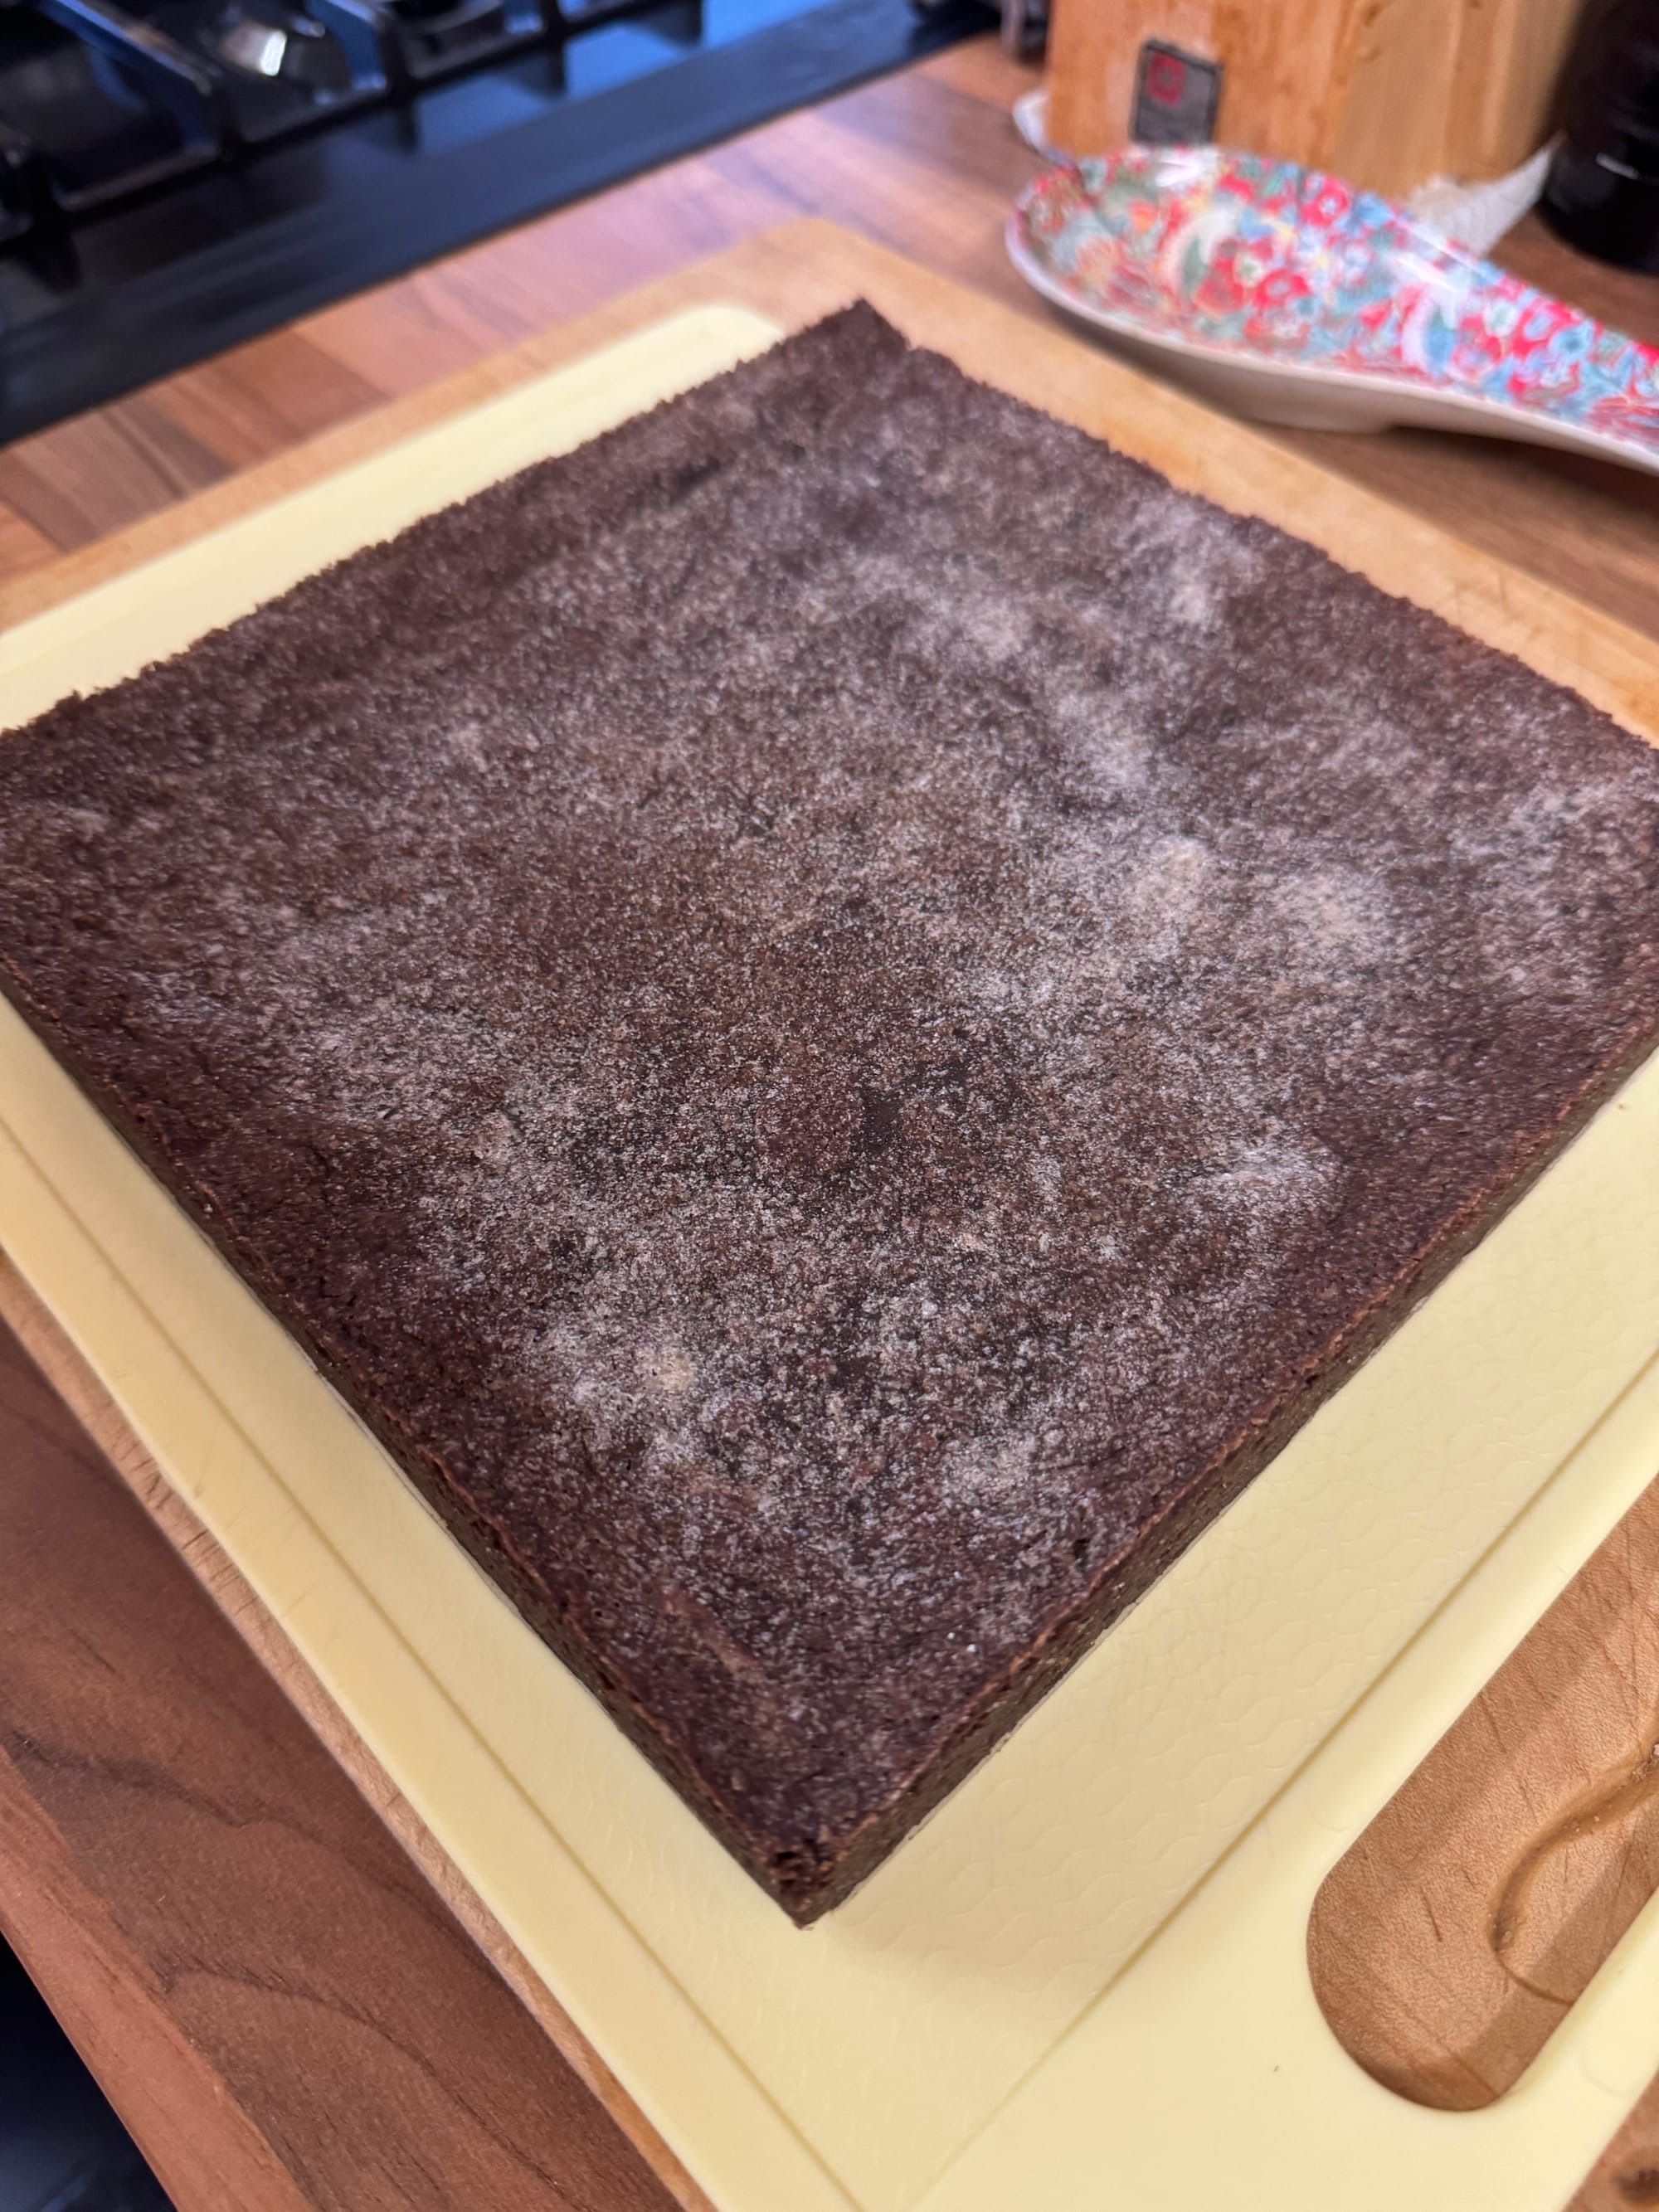 Old School Chocolate Concrete Cake